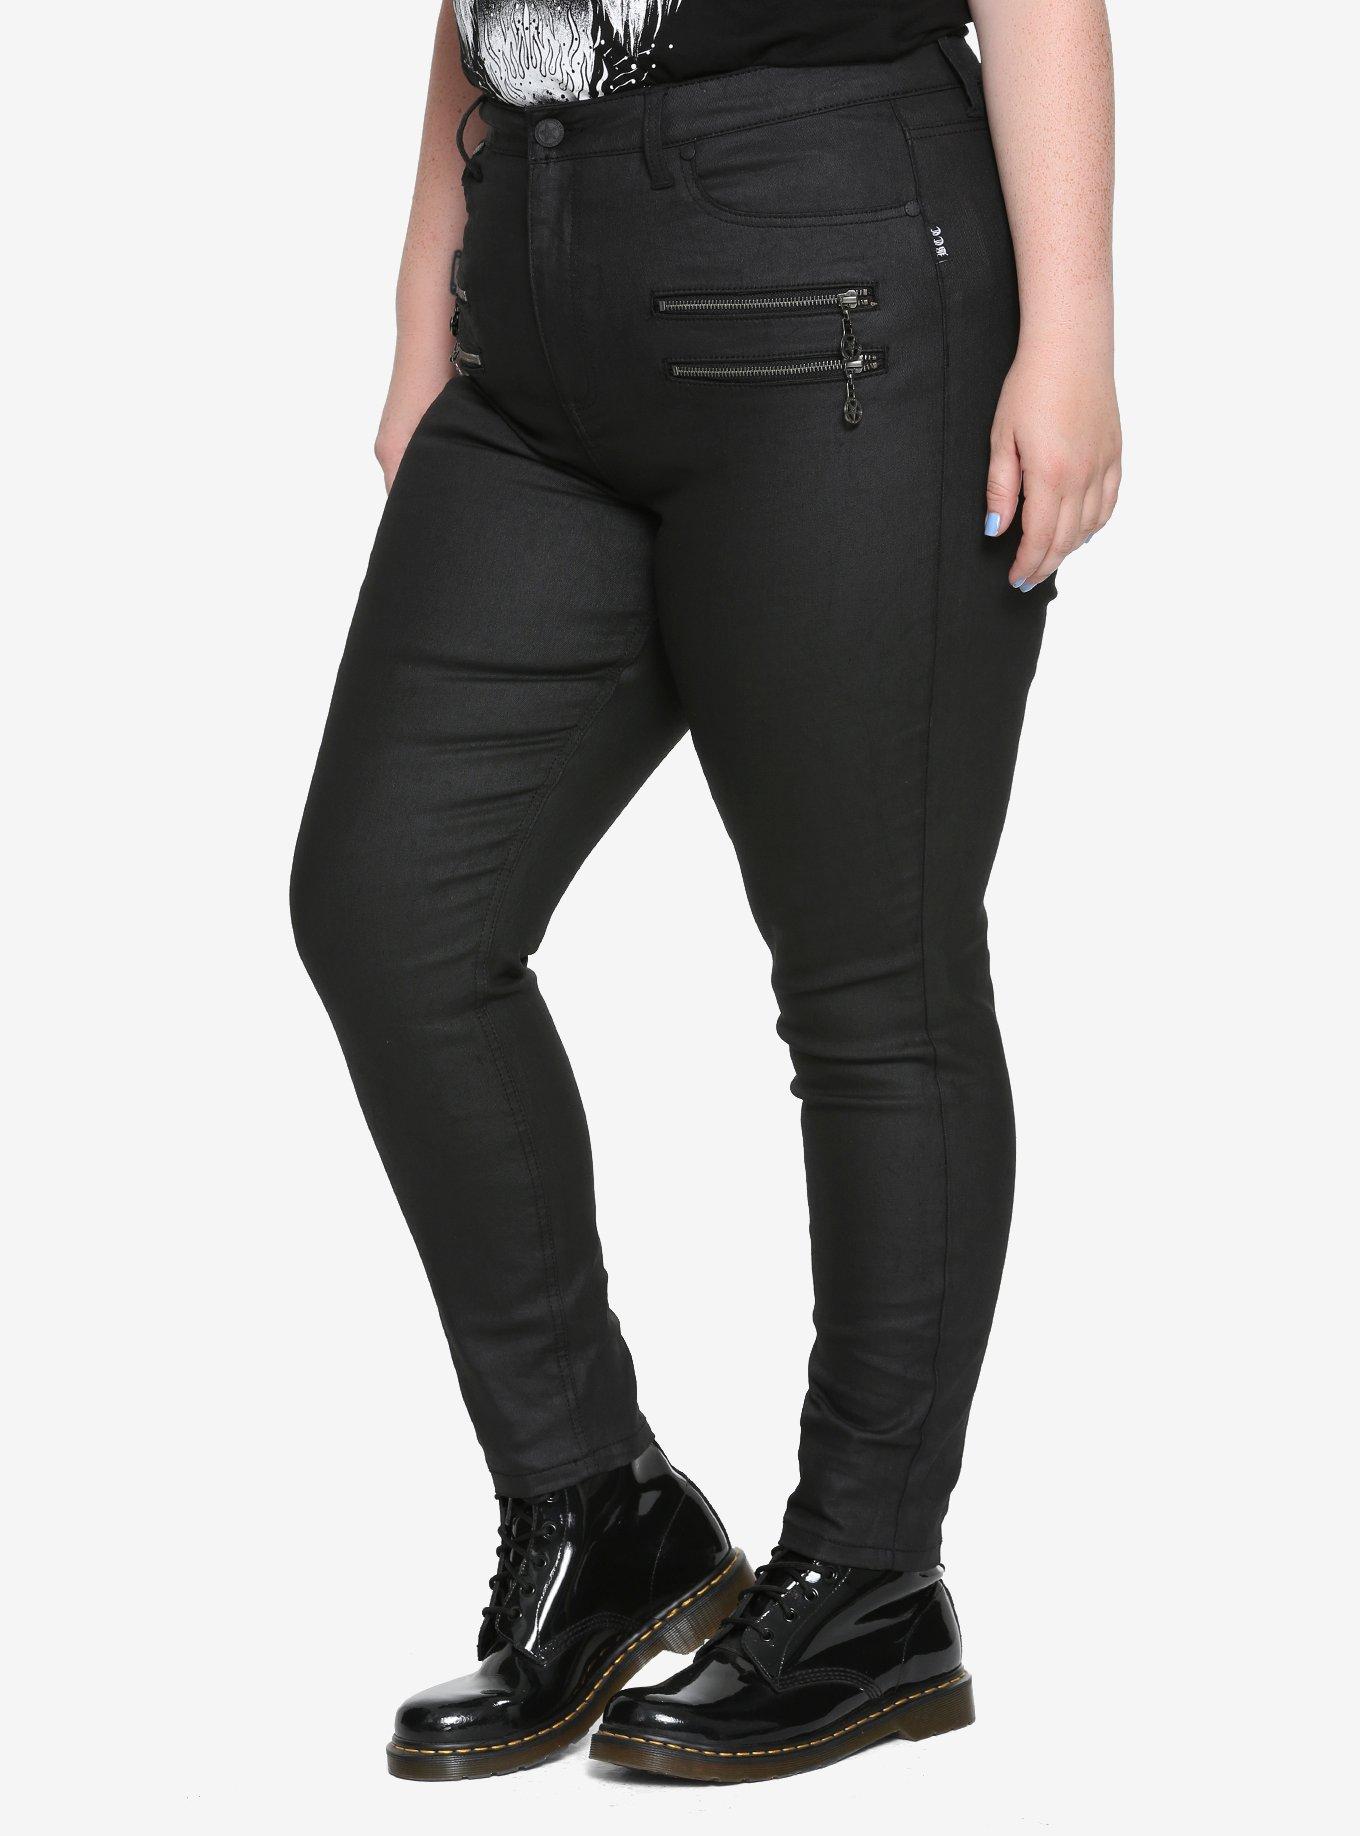 Blackcraft Pentagram Zipper Black Coated Skinny Jeans Plus Size, BLACK, hi-res